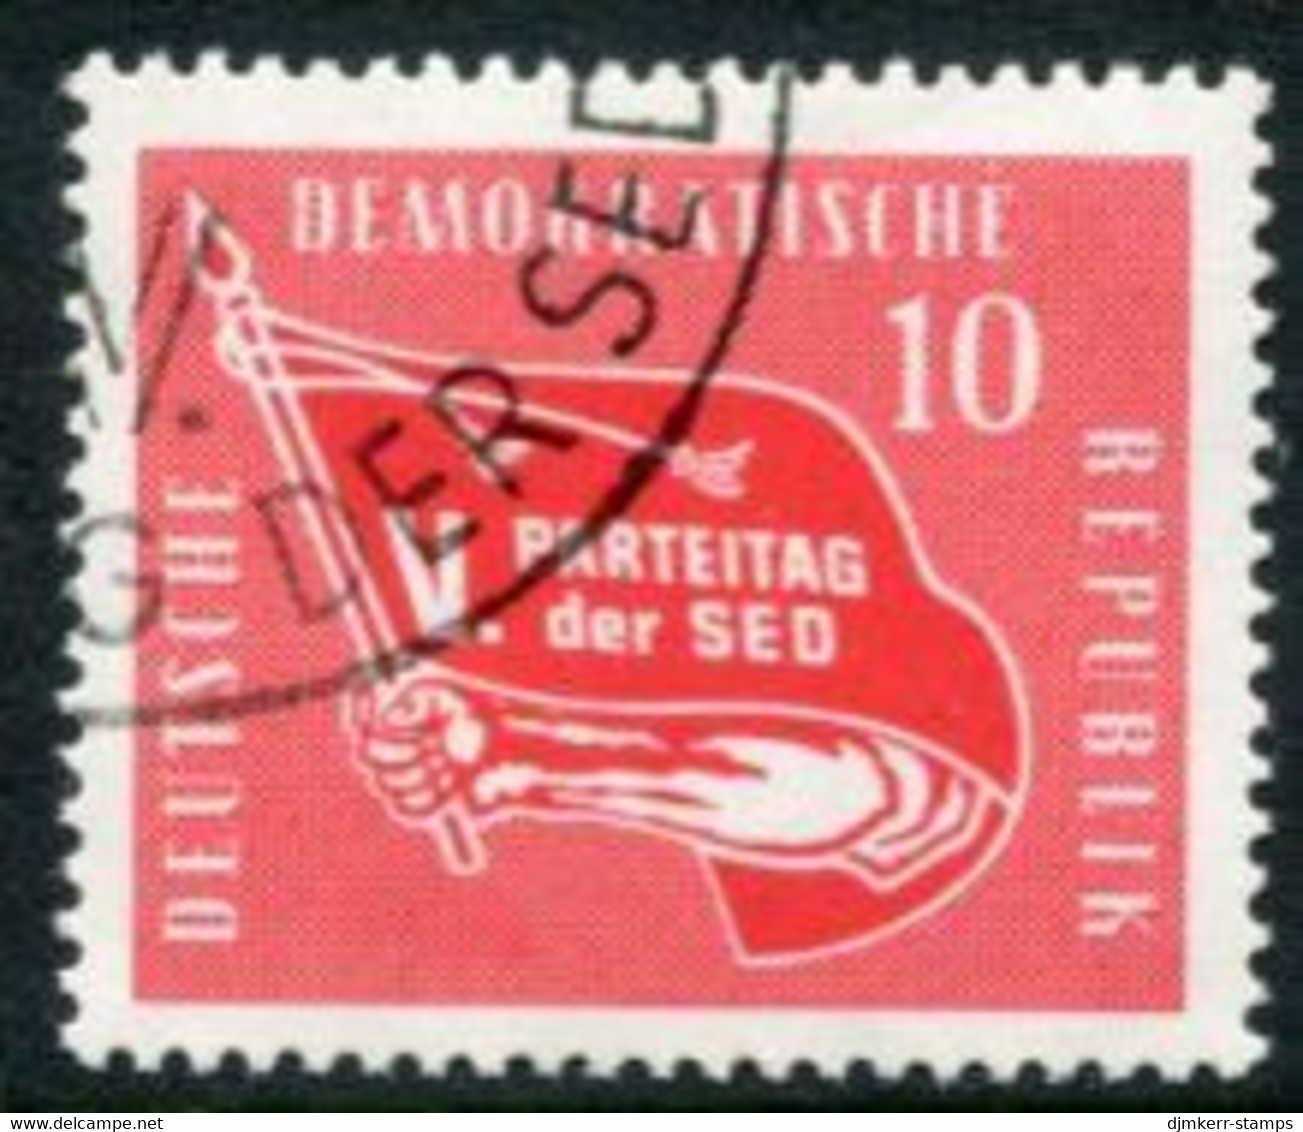 DDR / E. GERMANY 1958 Socialist Unity Party Day Used.  Michel  633 - Oblitérés